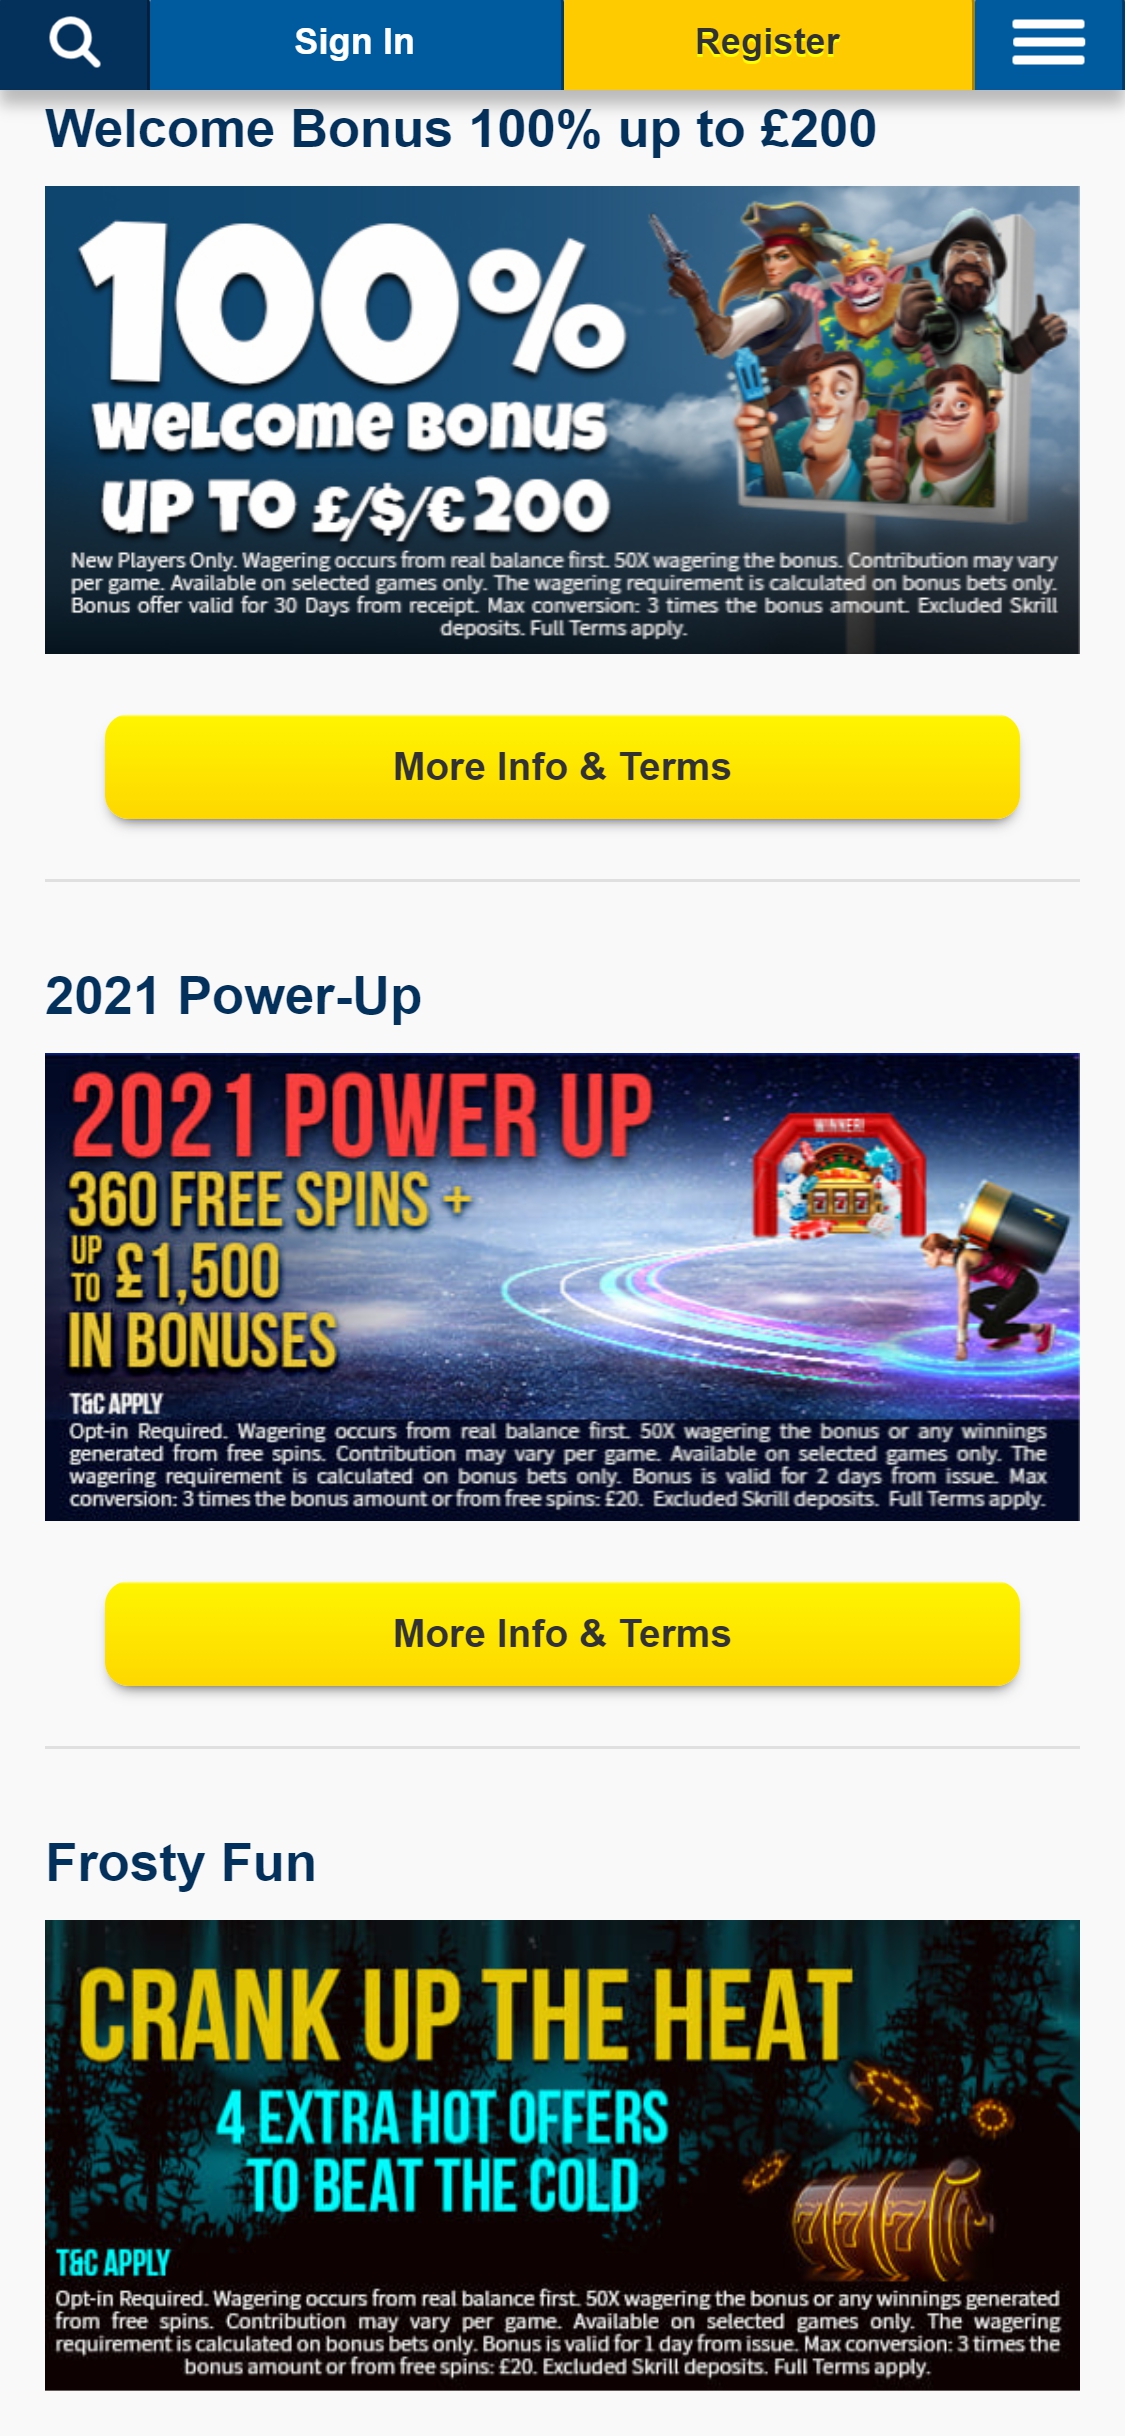 National Lottery Casino Mobile No Deposit Bonus Review